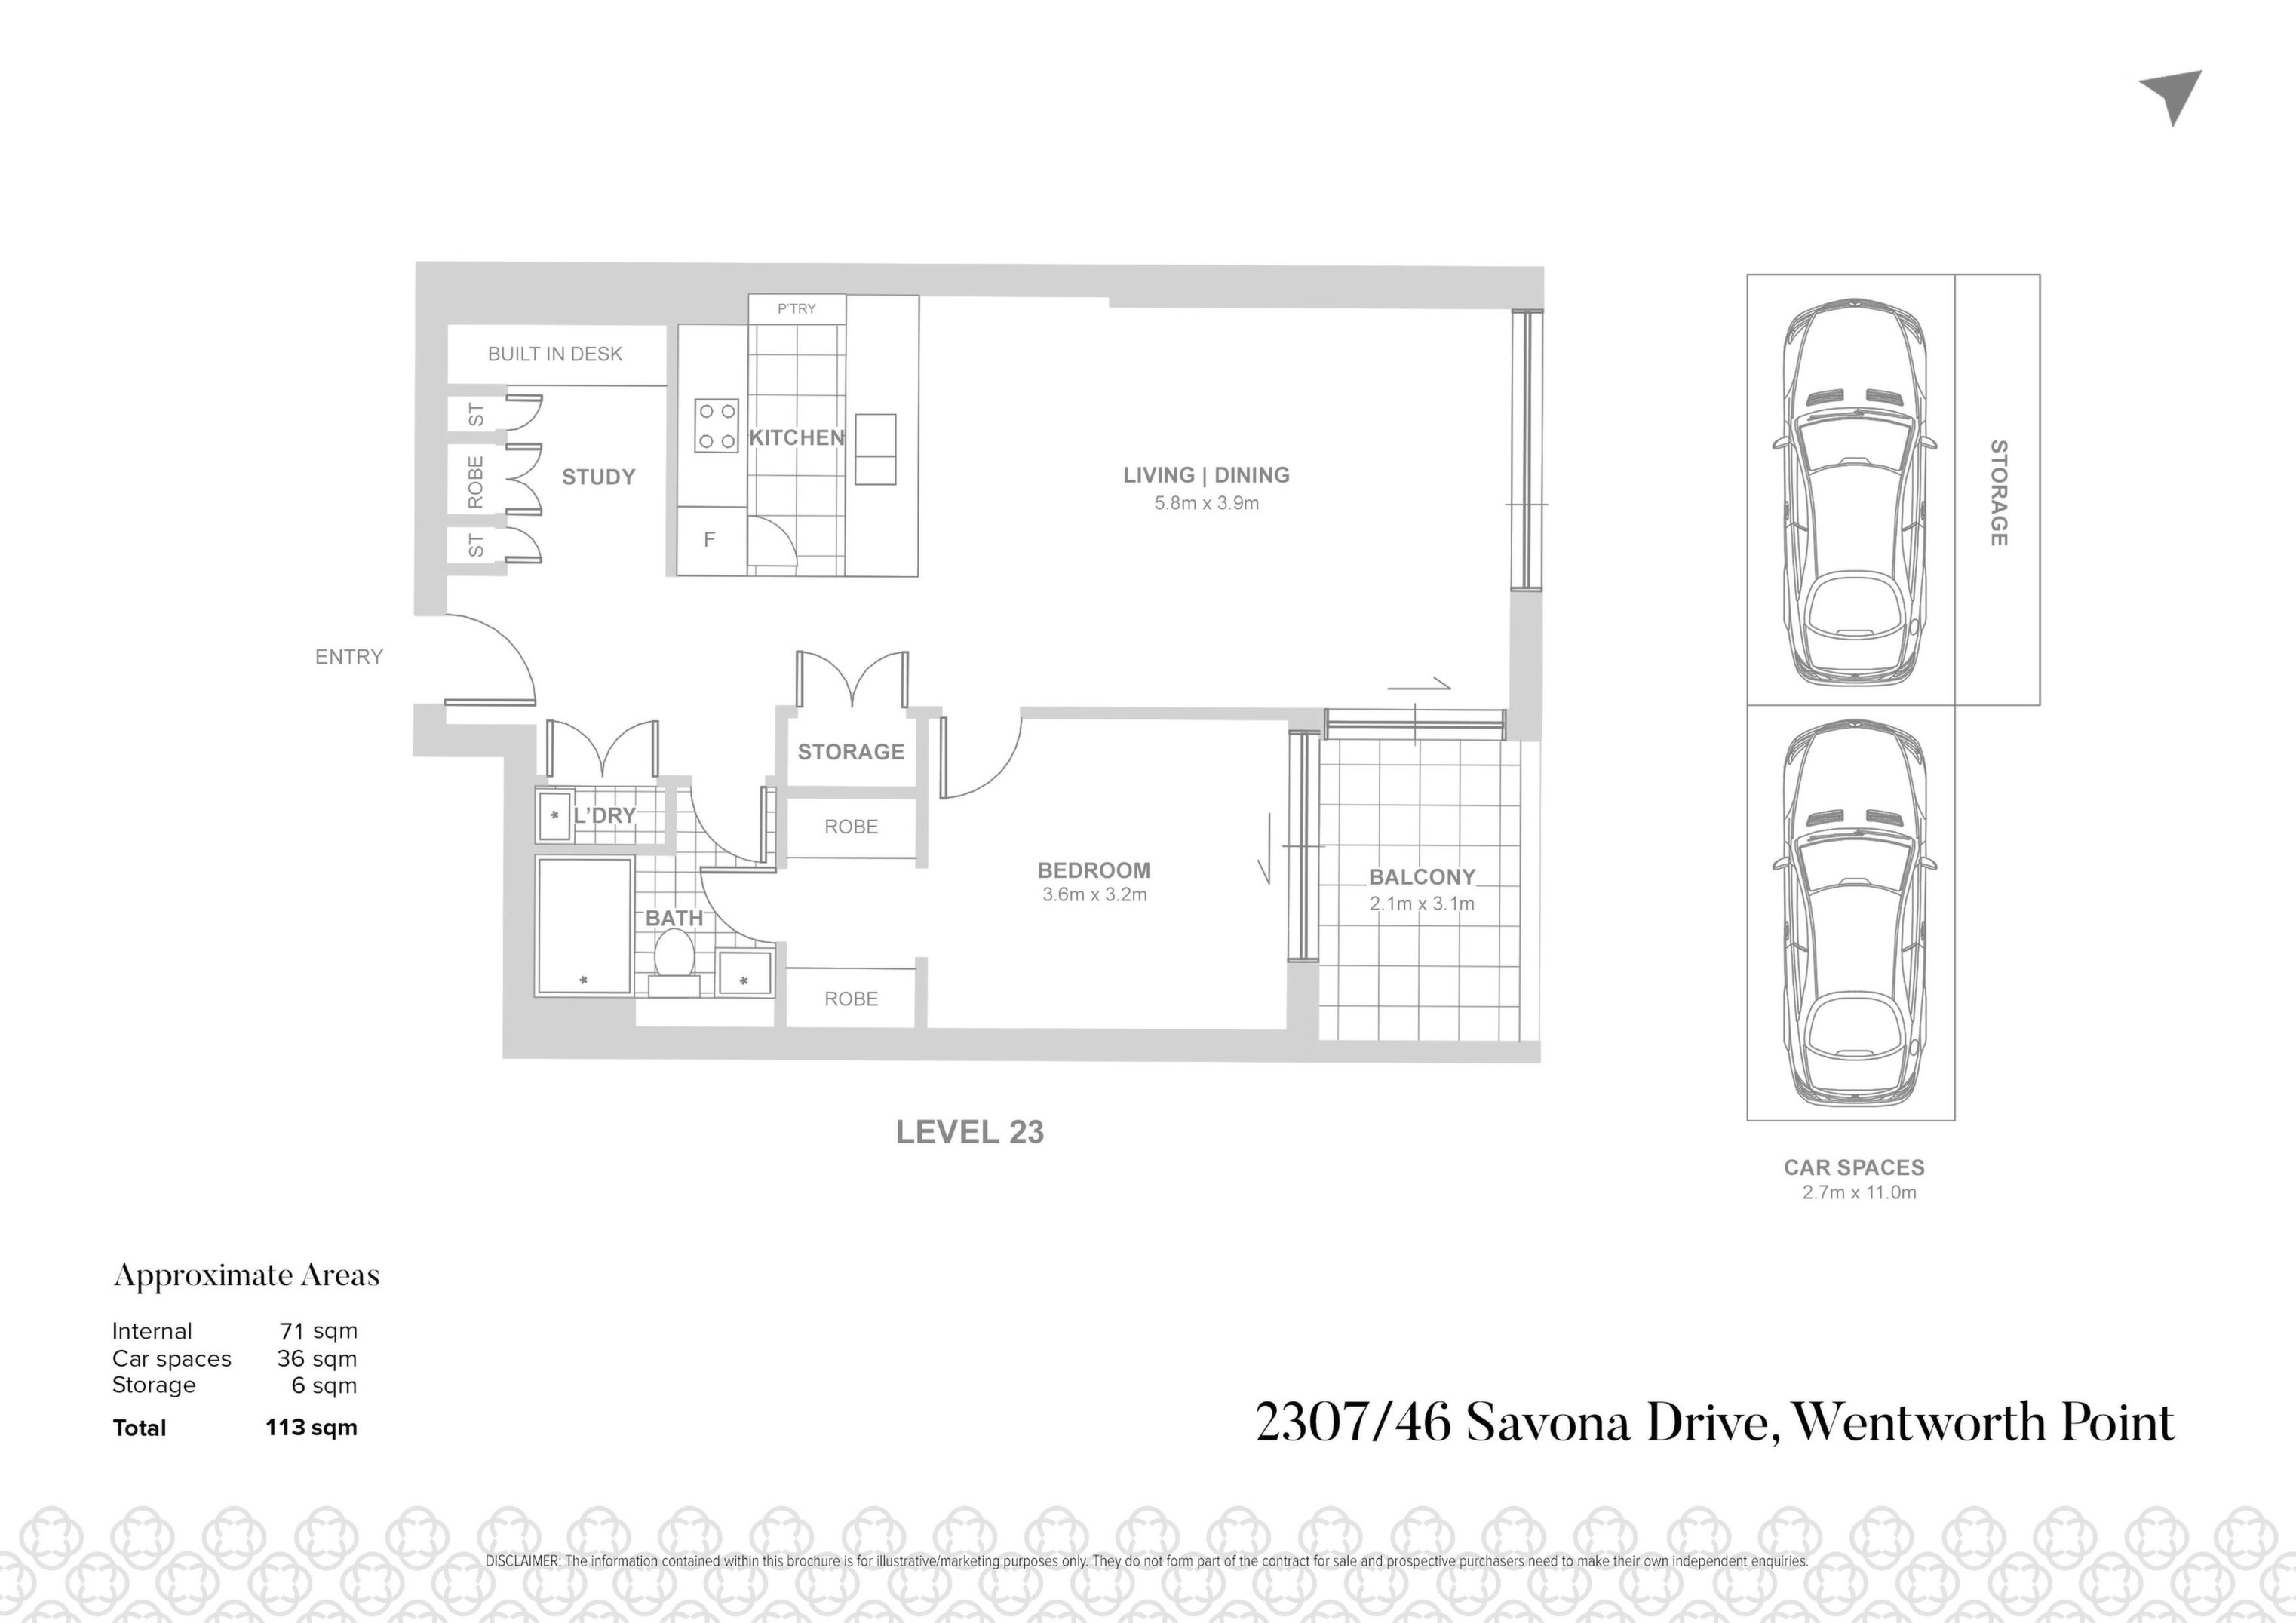 2307/46 Savona Drive, Wentworth Point Sold by Chidiac Realty - floorplan